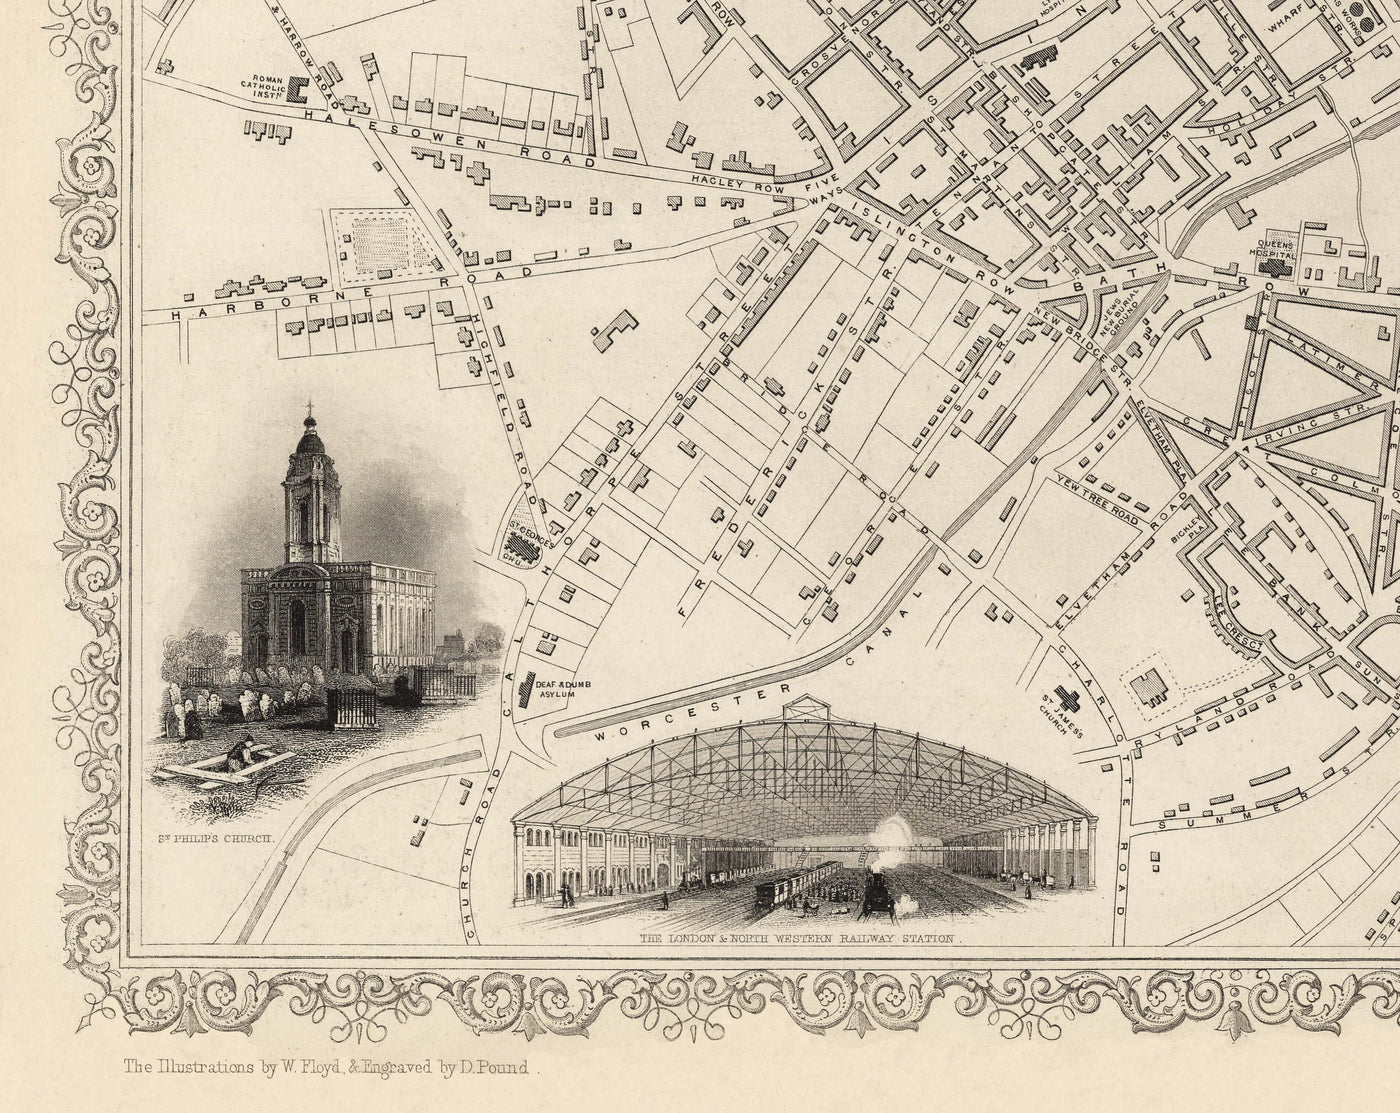 Ancienne carte de Birmingham en 1851 par J. & F. Tallis - Midlands, Brum, City Wall Art